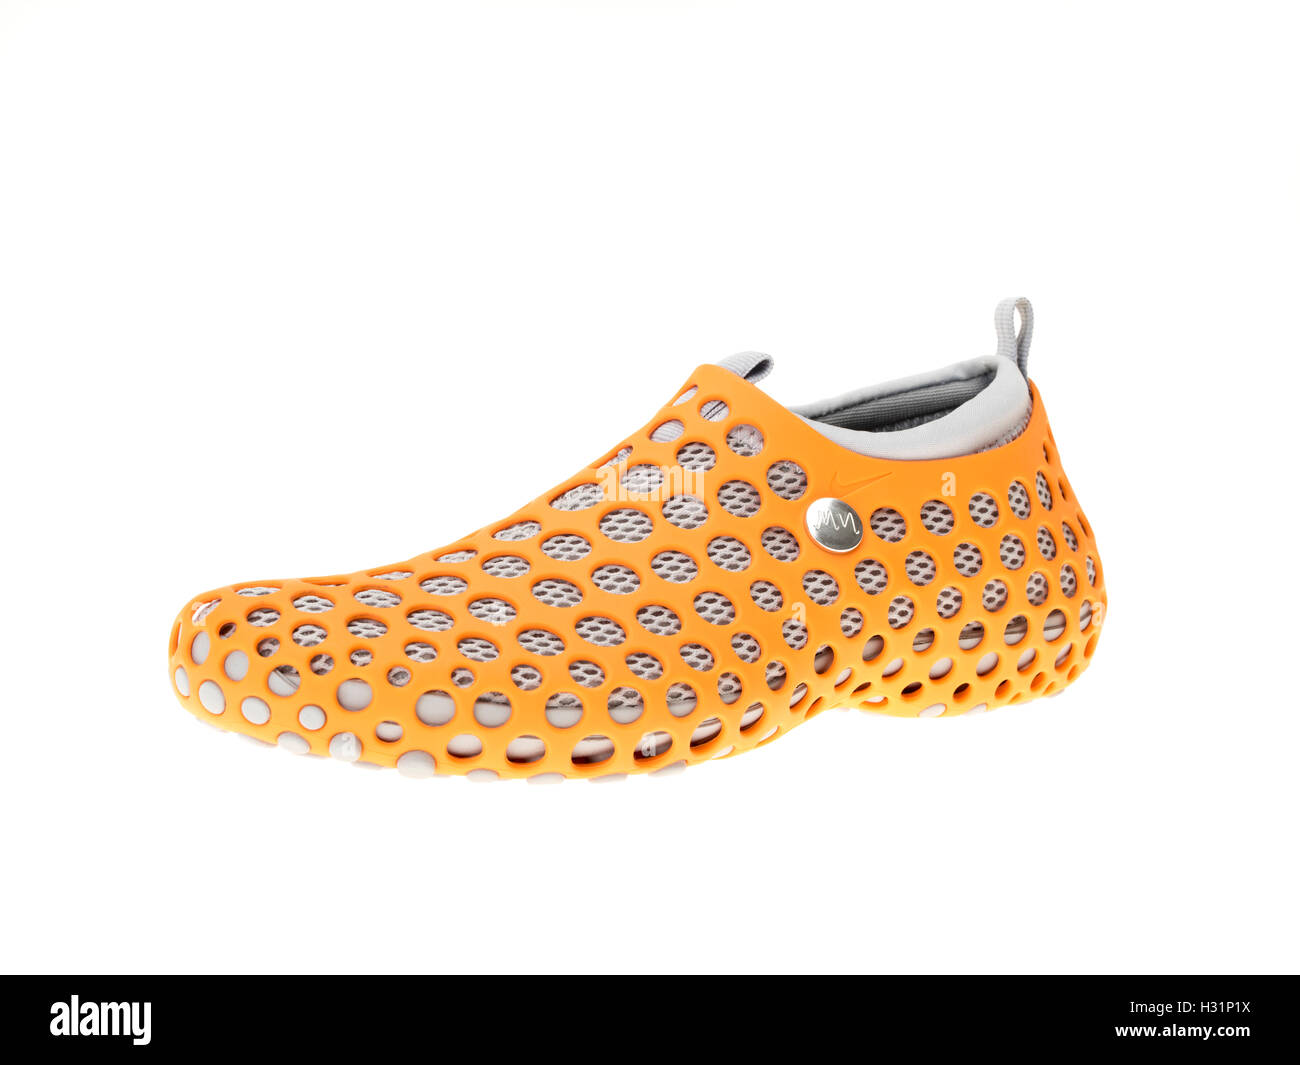 NEW - Nike Lab ZVEZDOCHKA x Marc Newson - Pro Orange Grey - 749431